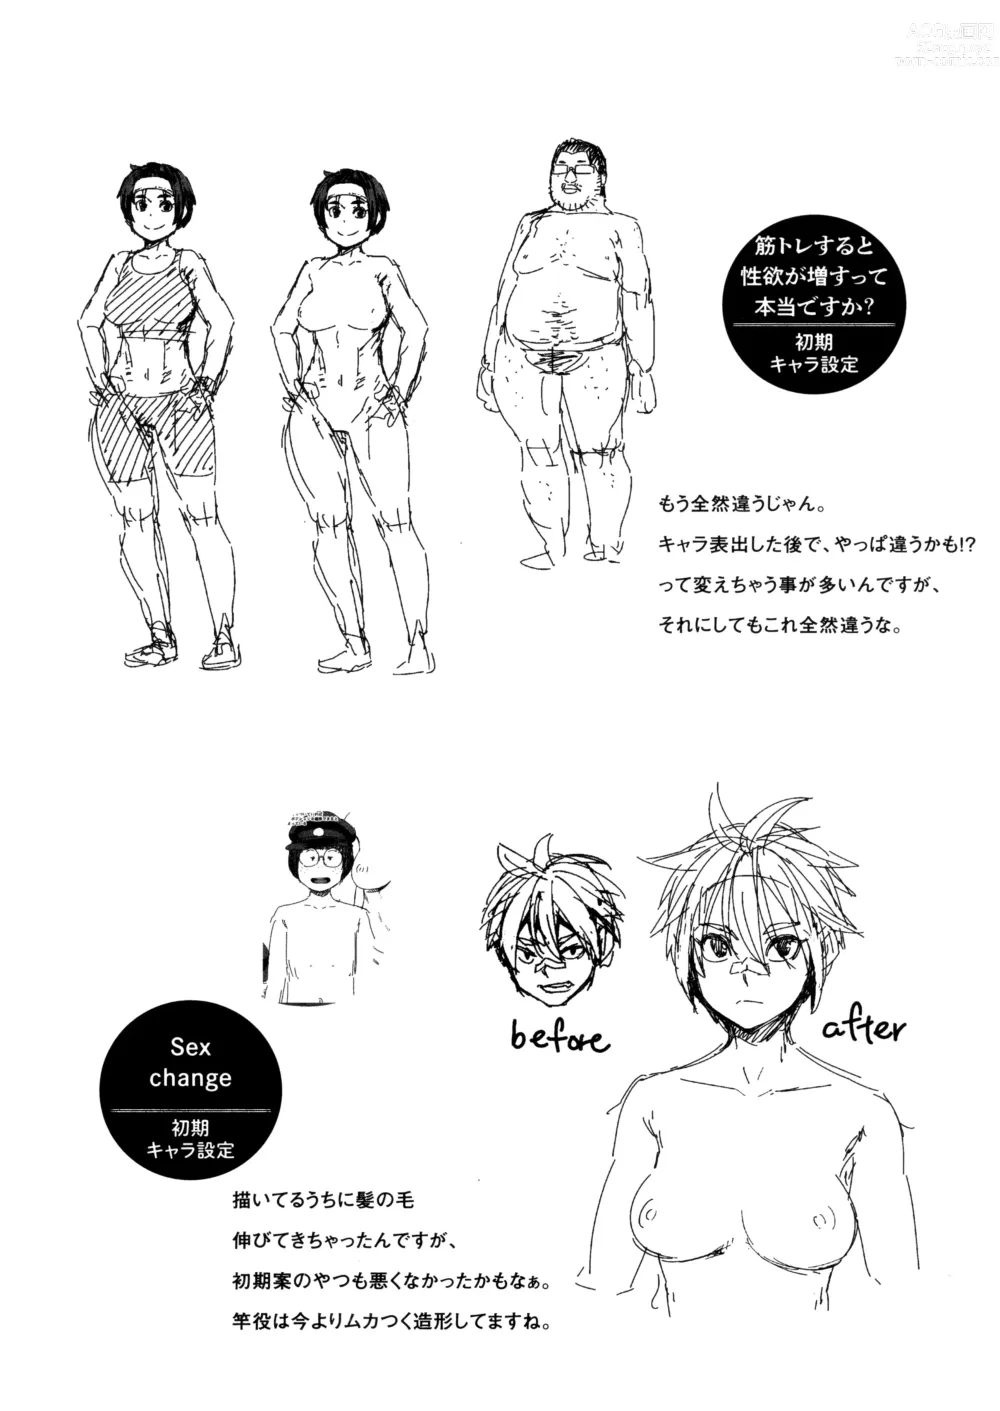 Page 218 of manga Sweet and Hot + Melonbooks Tokuten Manga Leaflet